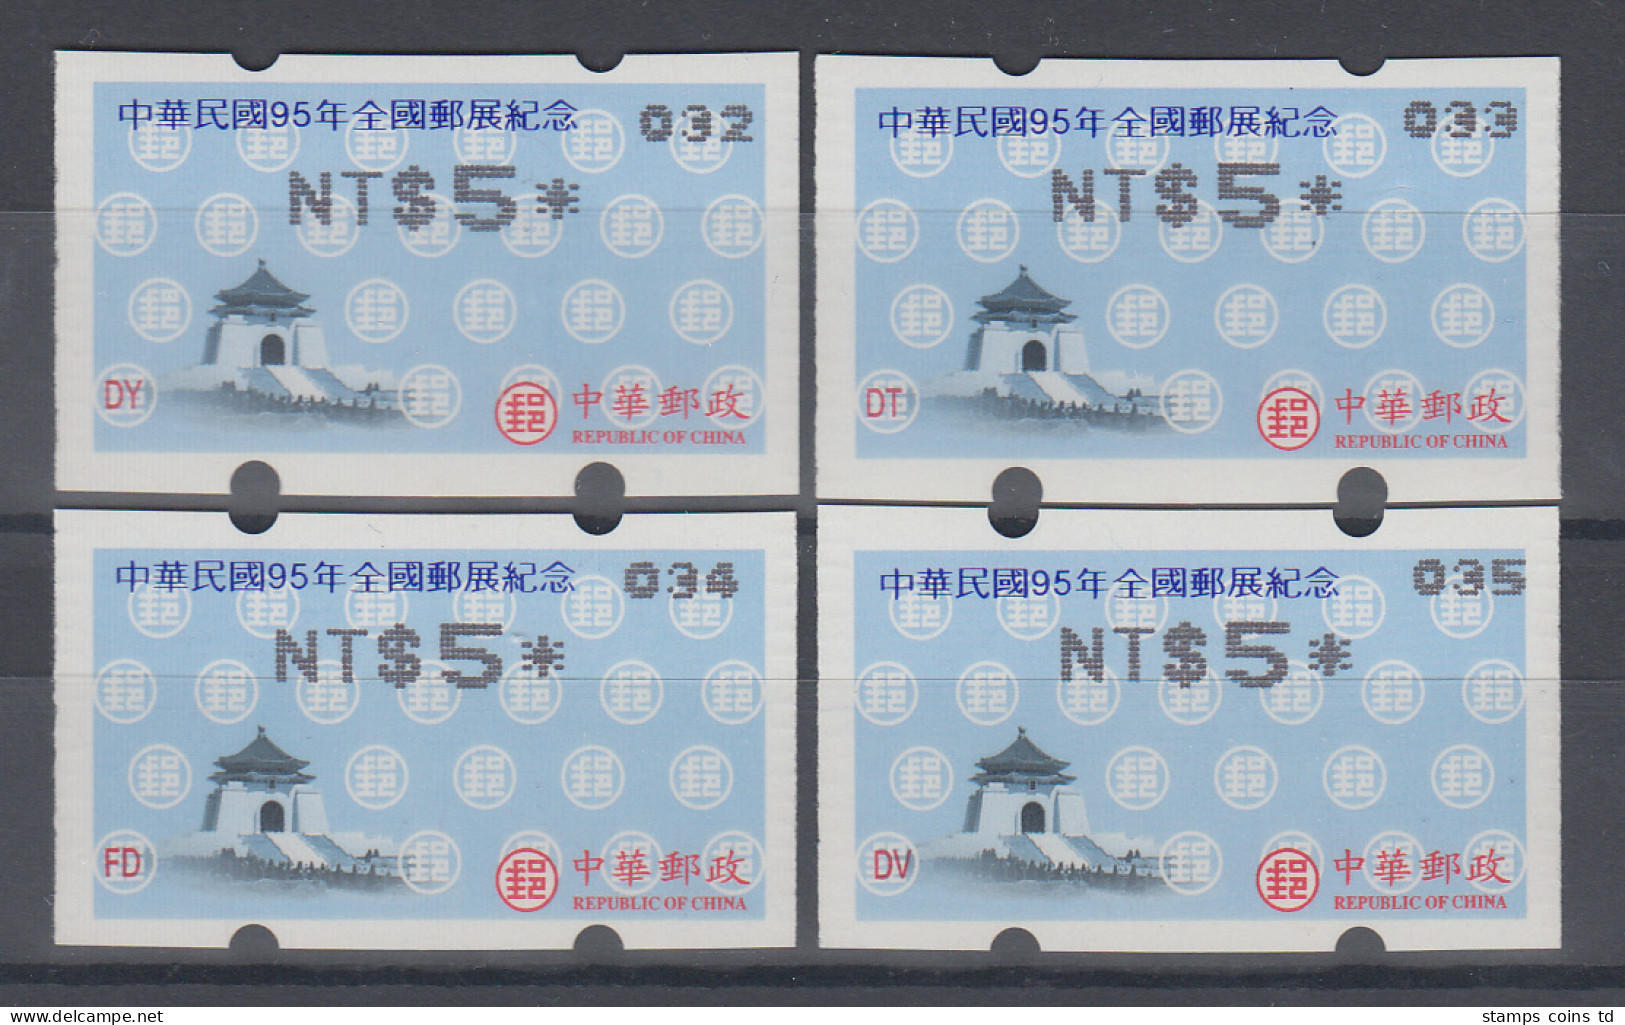 China Taiwan Nagler- Sonder-ATM ROCUPEX 2006  Mi.-Nr. 13.3e  032,033,034,035 ** - Distribuidores